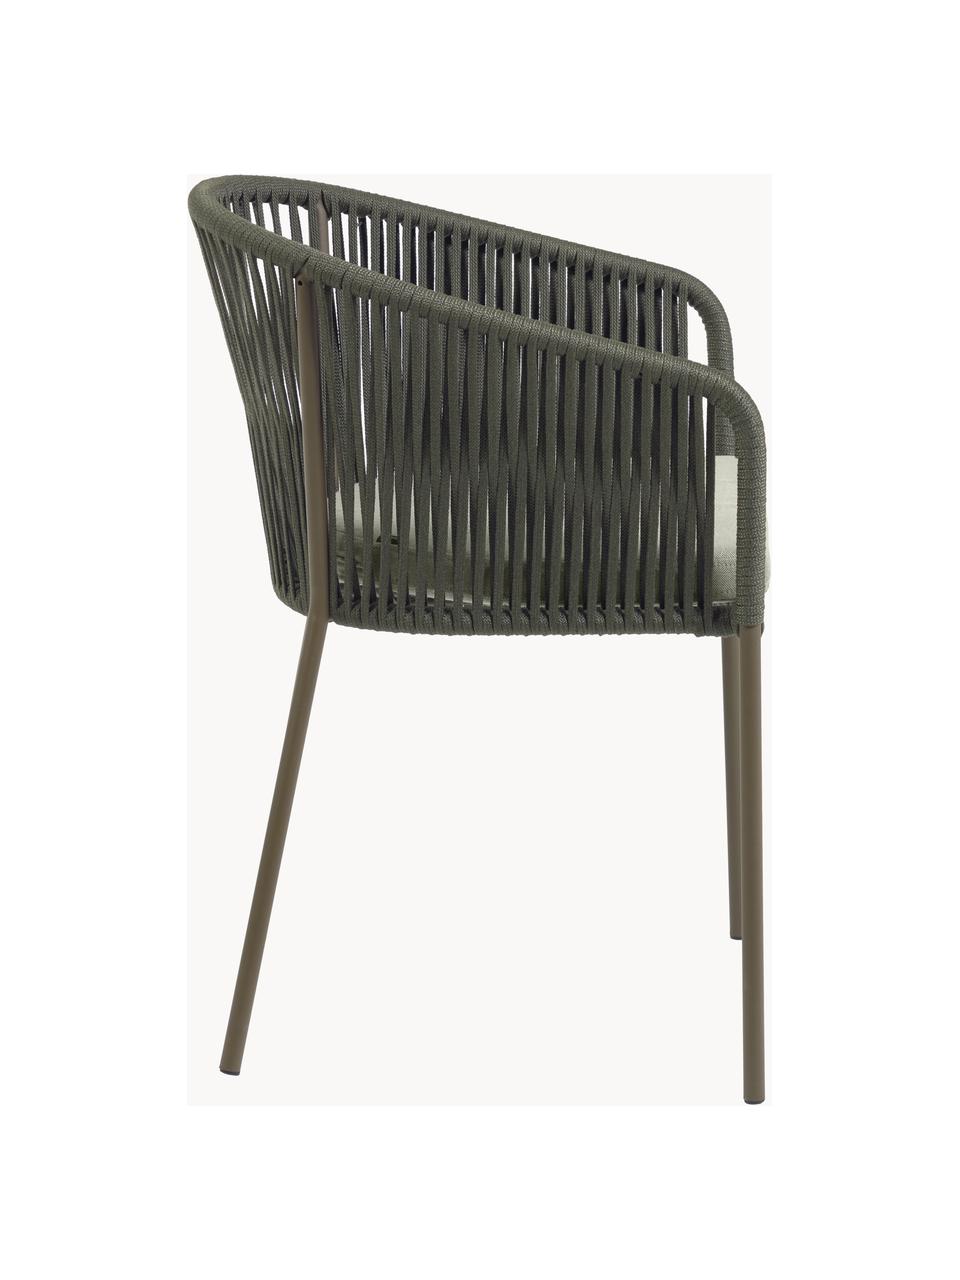 Záhradná stolička Yanet, Svetlobéžová, olivovozelená, Š 56 x H 55 cm